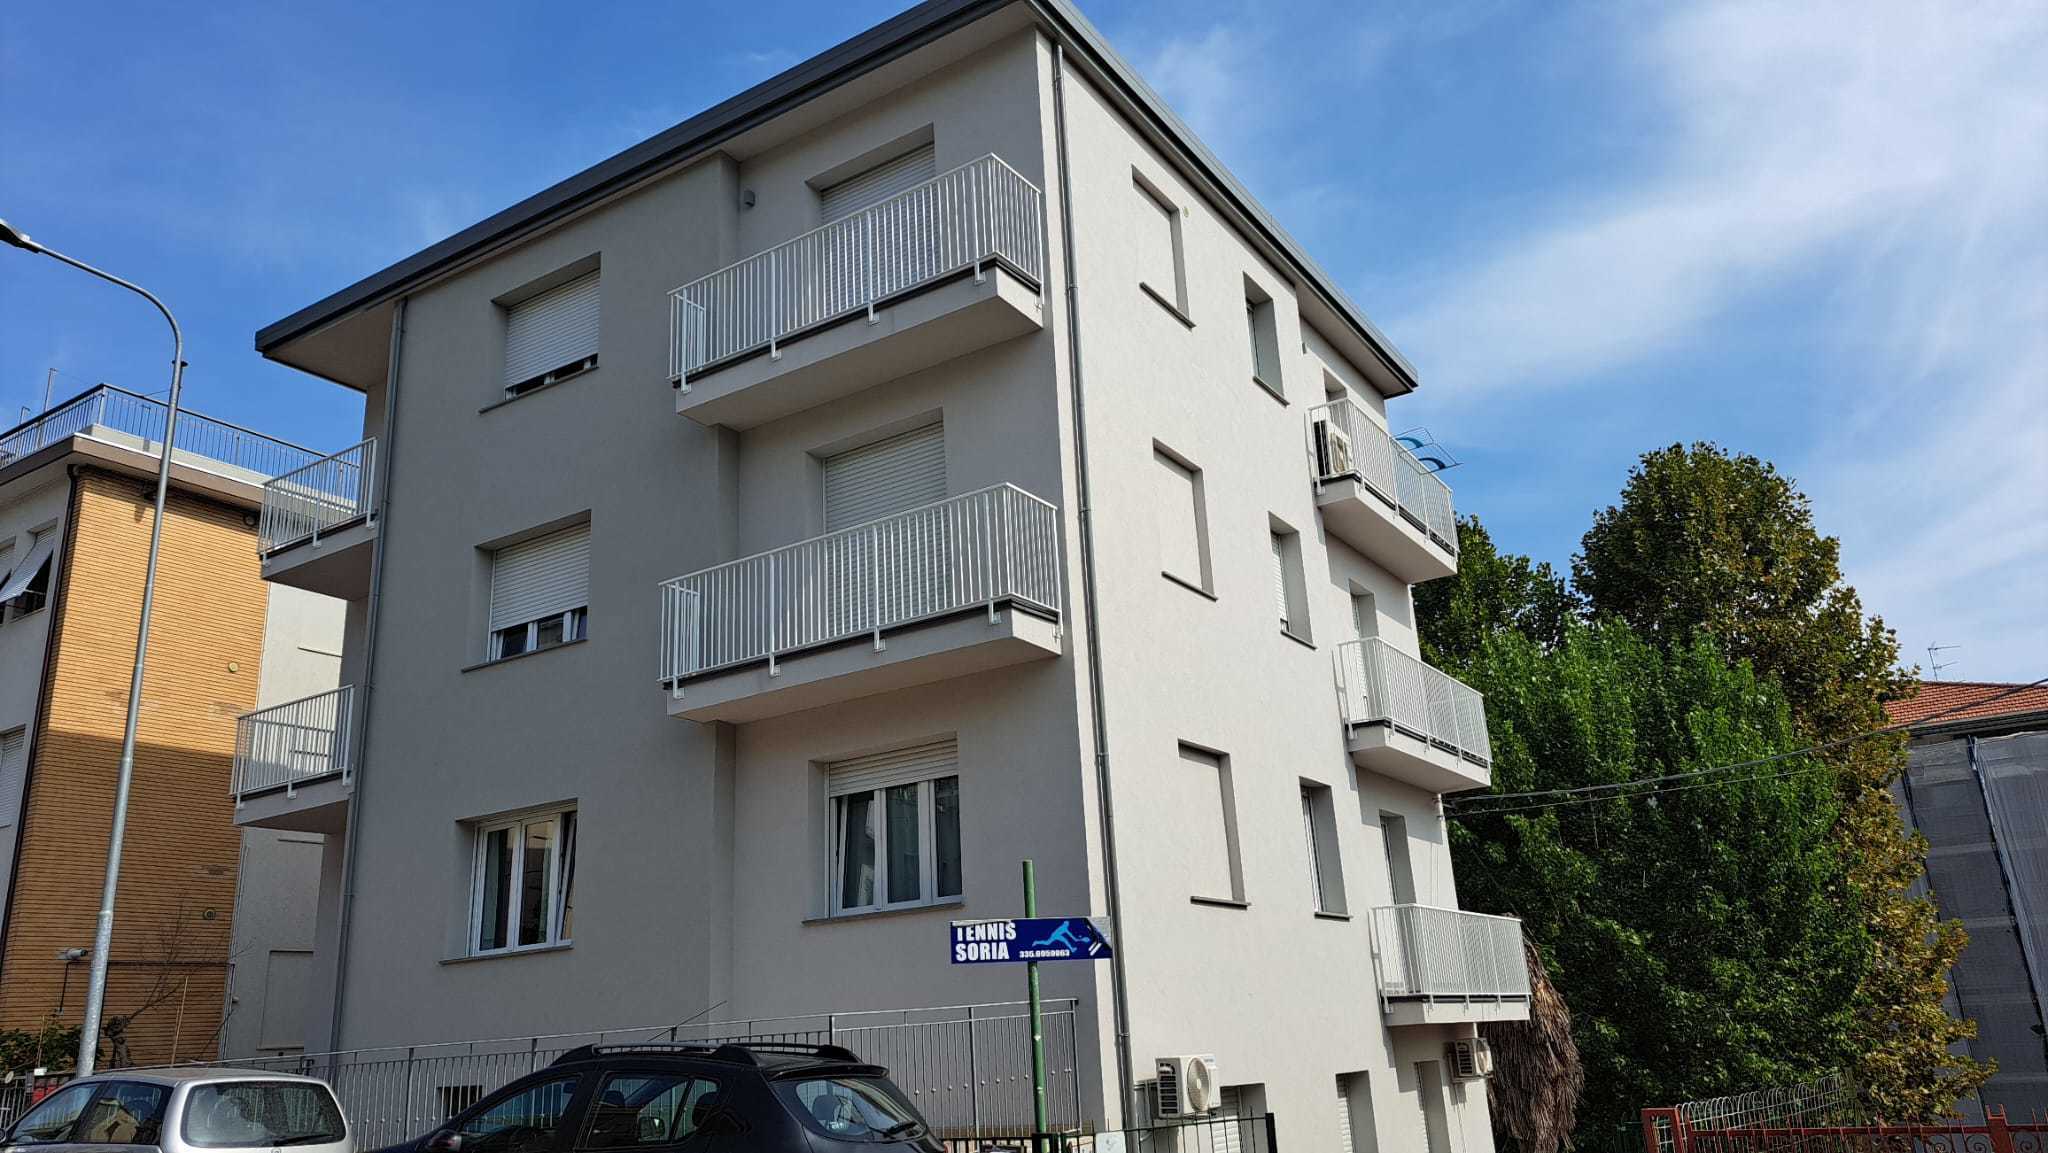 Appartamento in vendita in strada panoramica adriatica 130, Pesaro